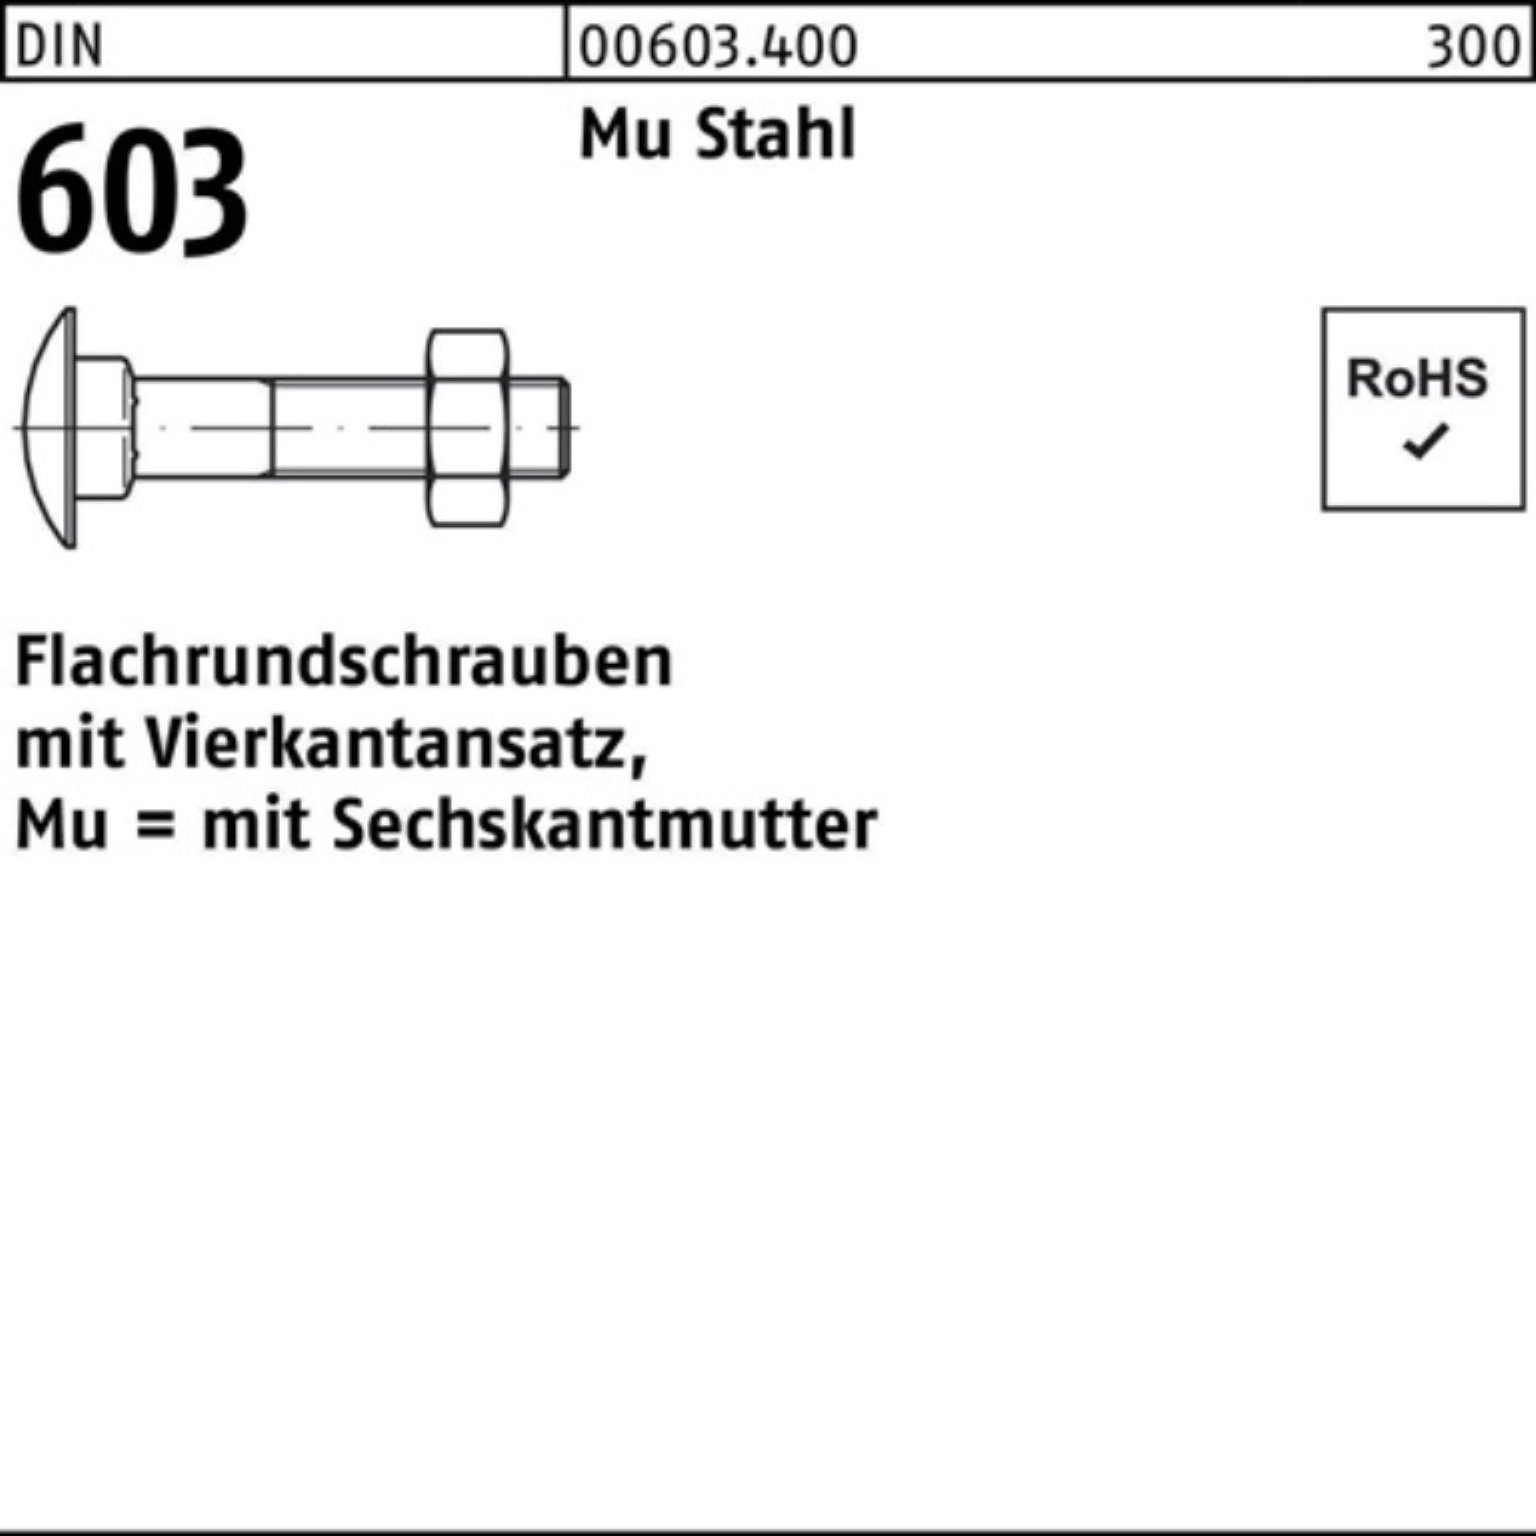 Vierkantansatz/6-ktmutter 603 Flachrundschraube Pack Schraube Reyher DIN 100er M10x45